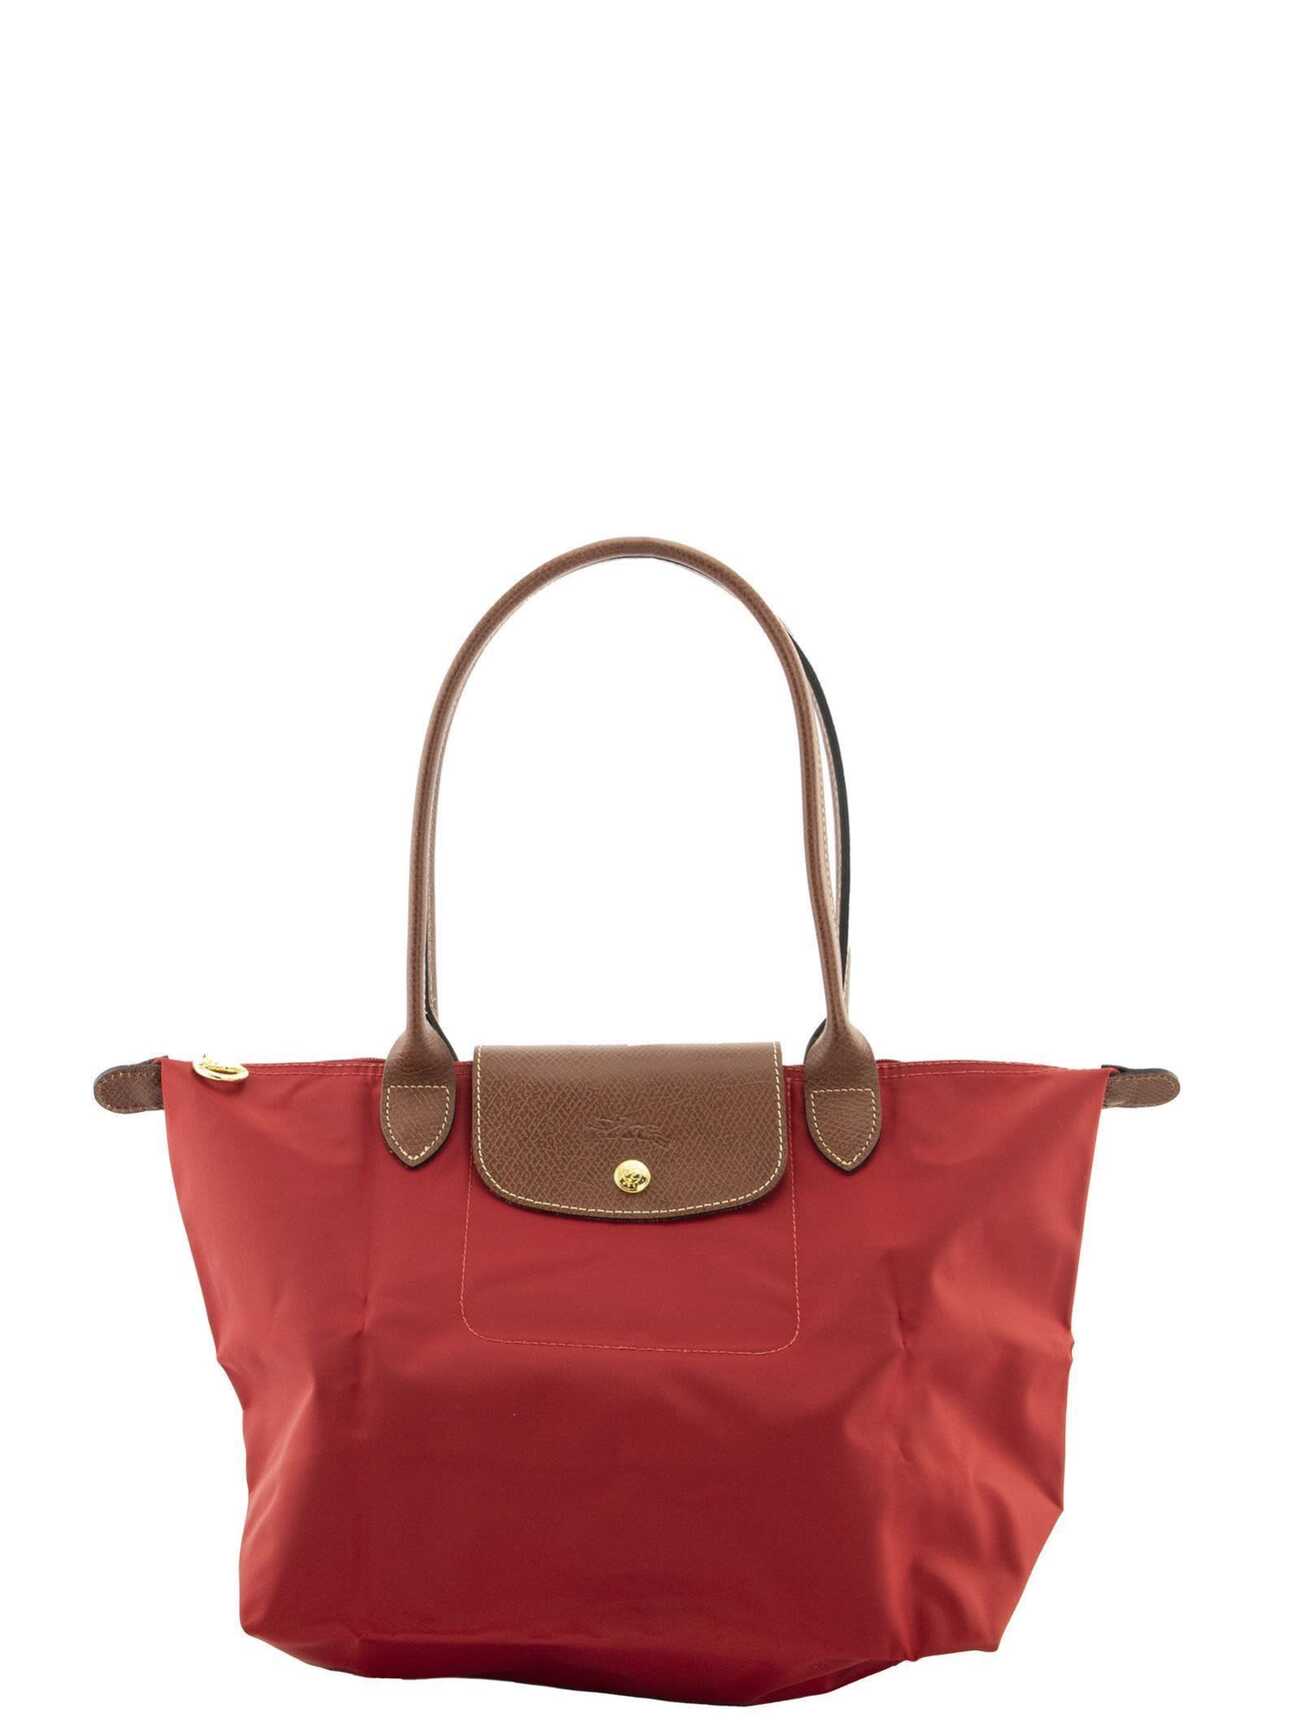 Longchamp Le Pliage Original - Shoulder Bag S in red